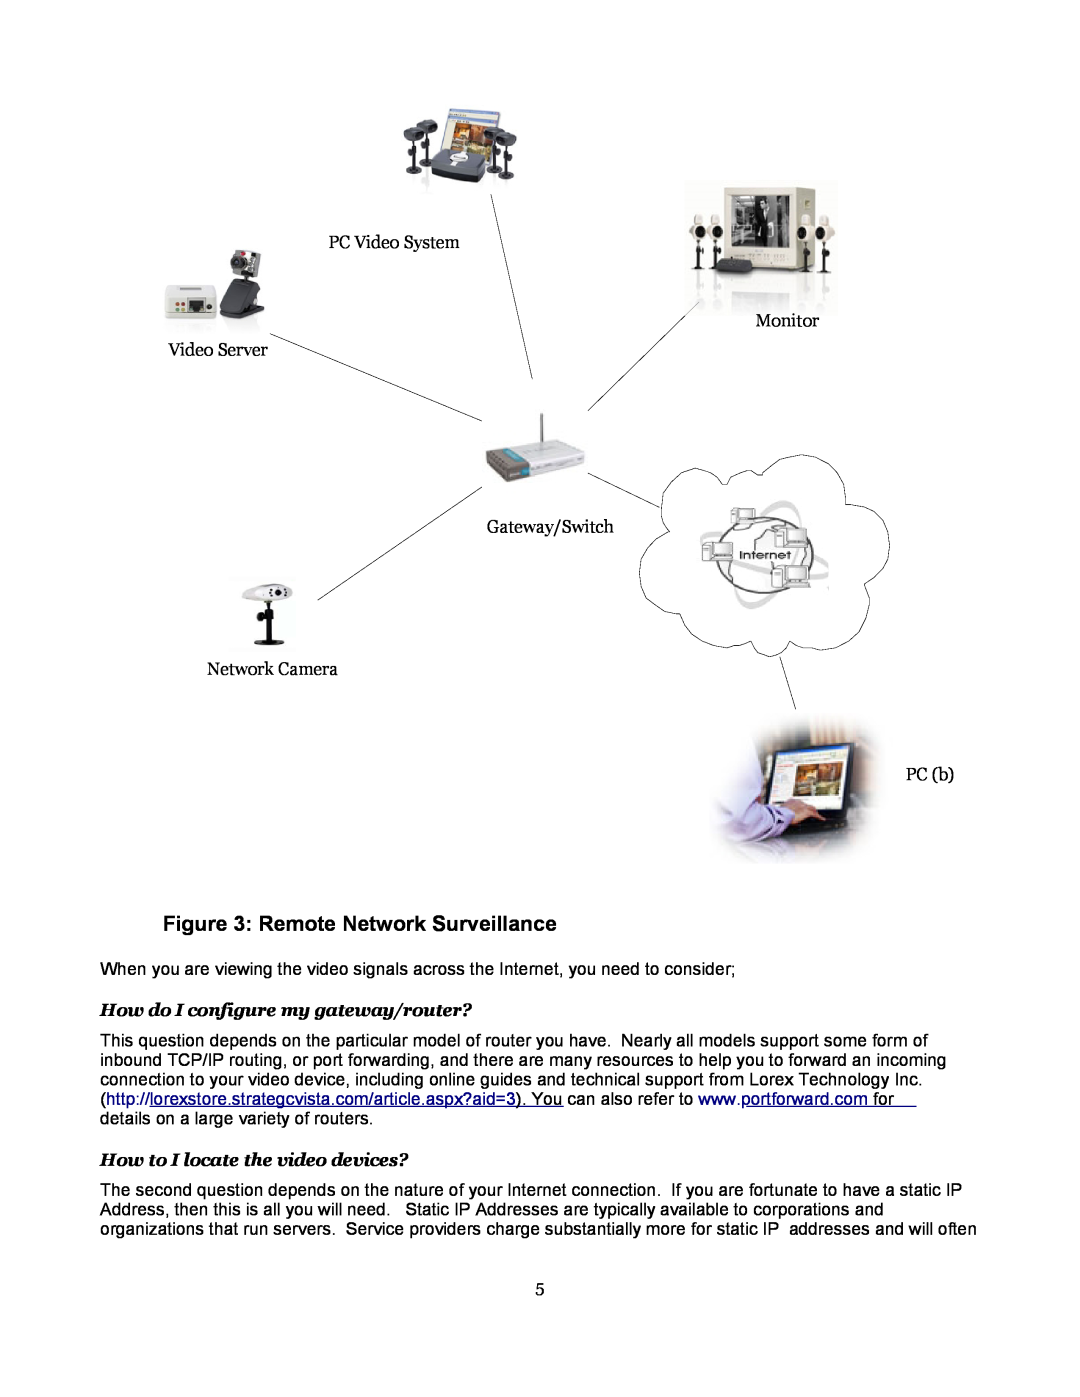 LOREX Technology Surveillance Systems manual Remote Network Surveillance, How do I configure my gateway/router? 